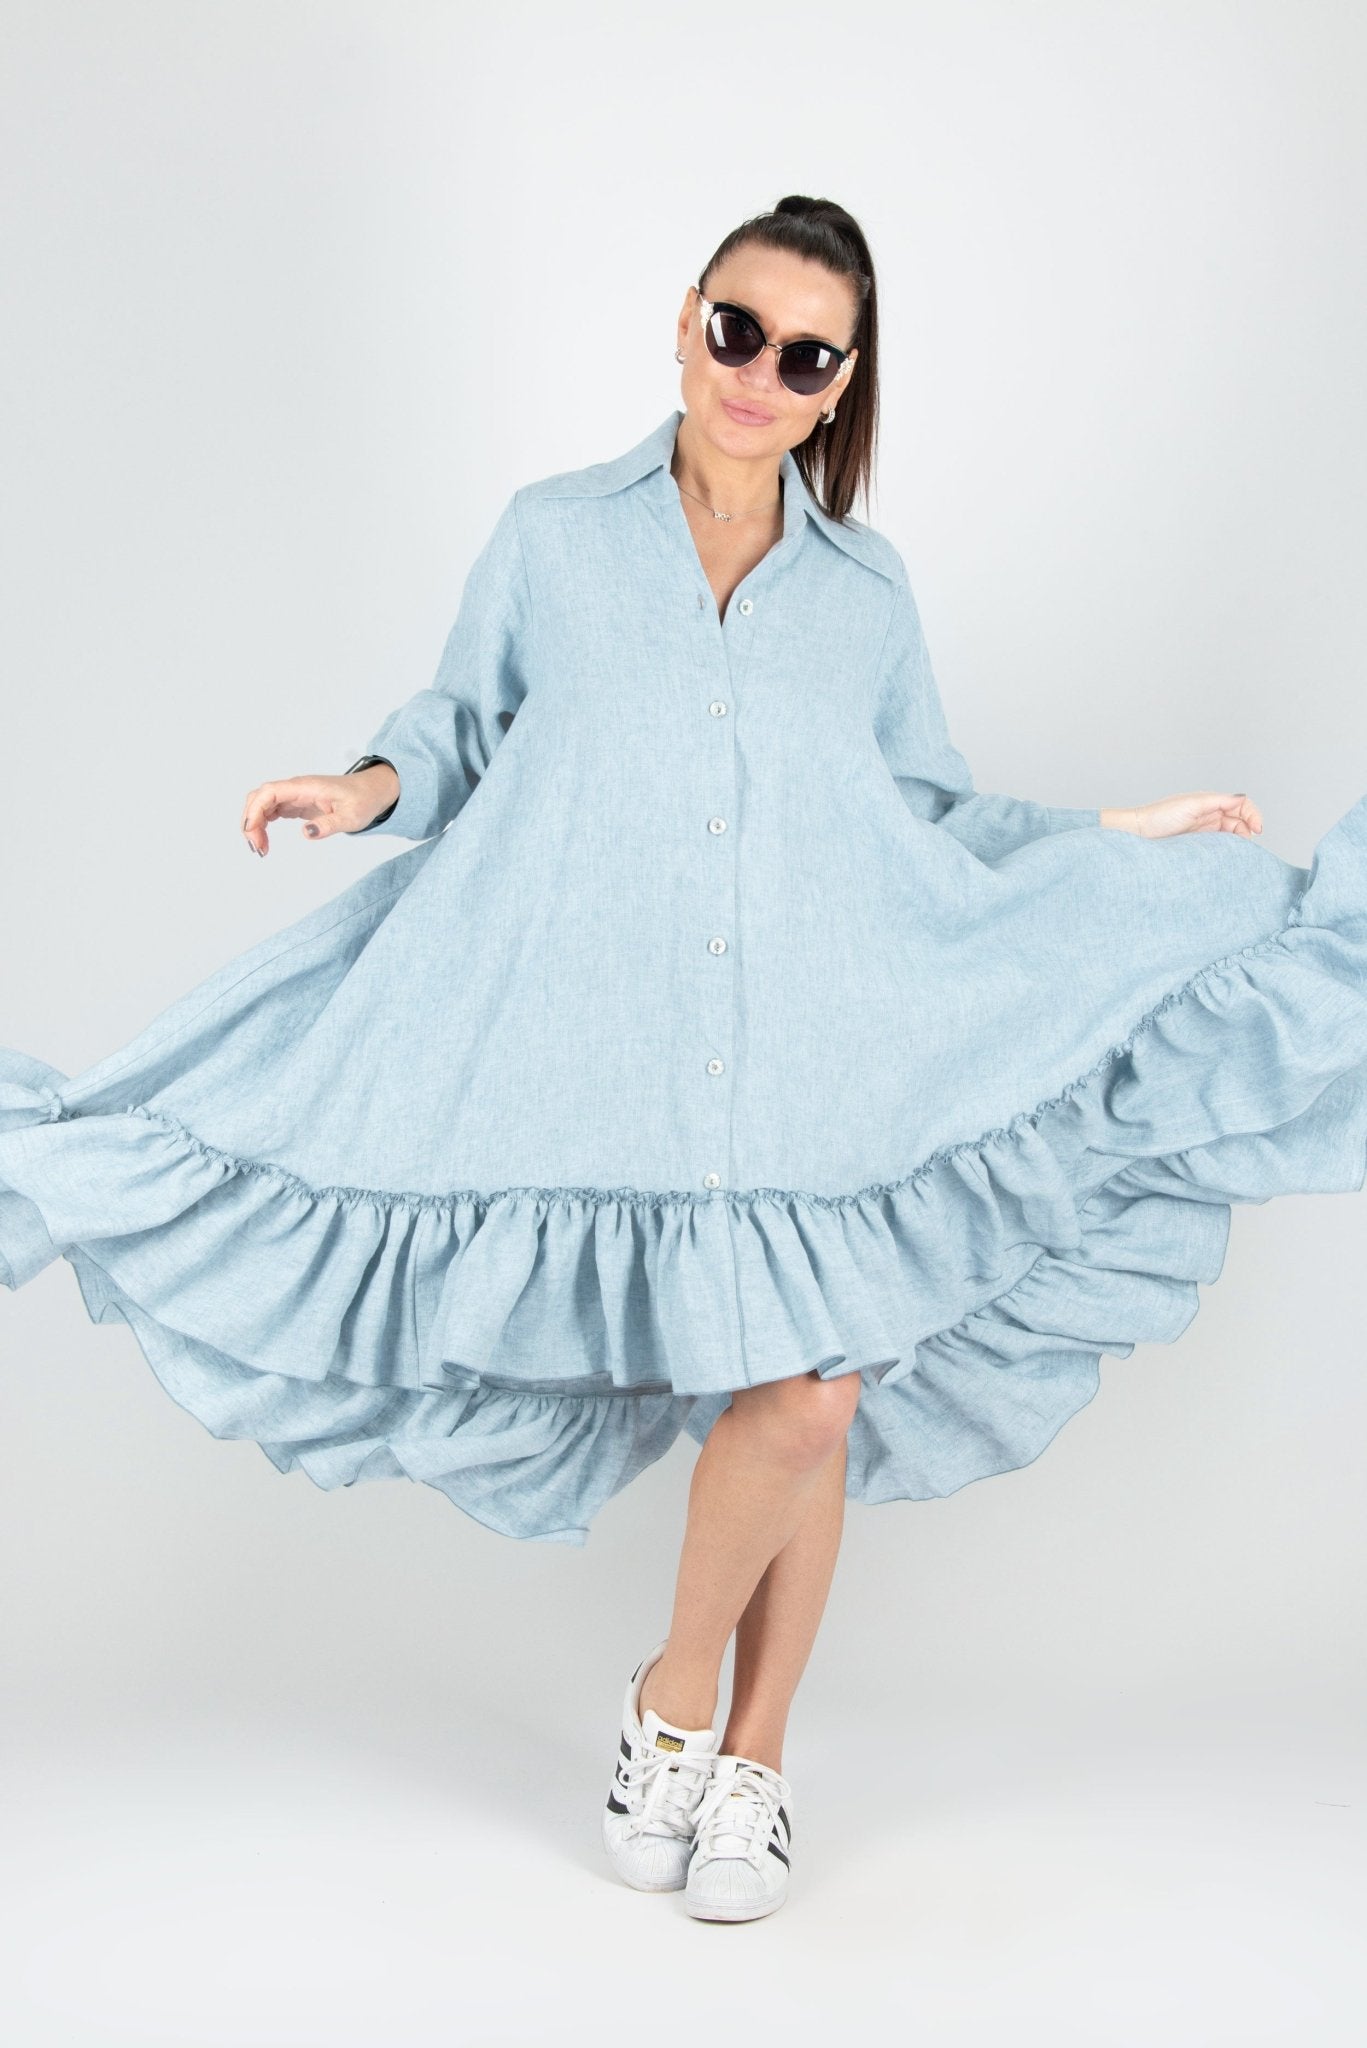 Blue Linen summer Dress VANESA - EUG FASHION EugFashion 